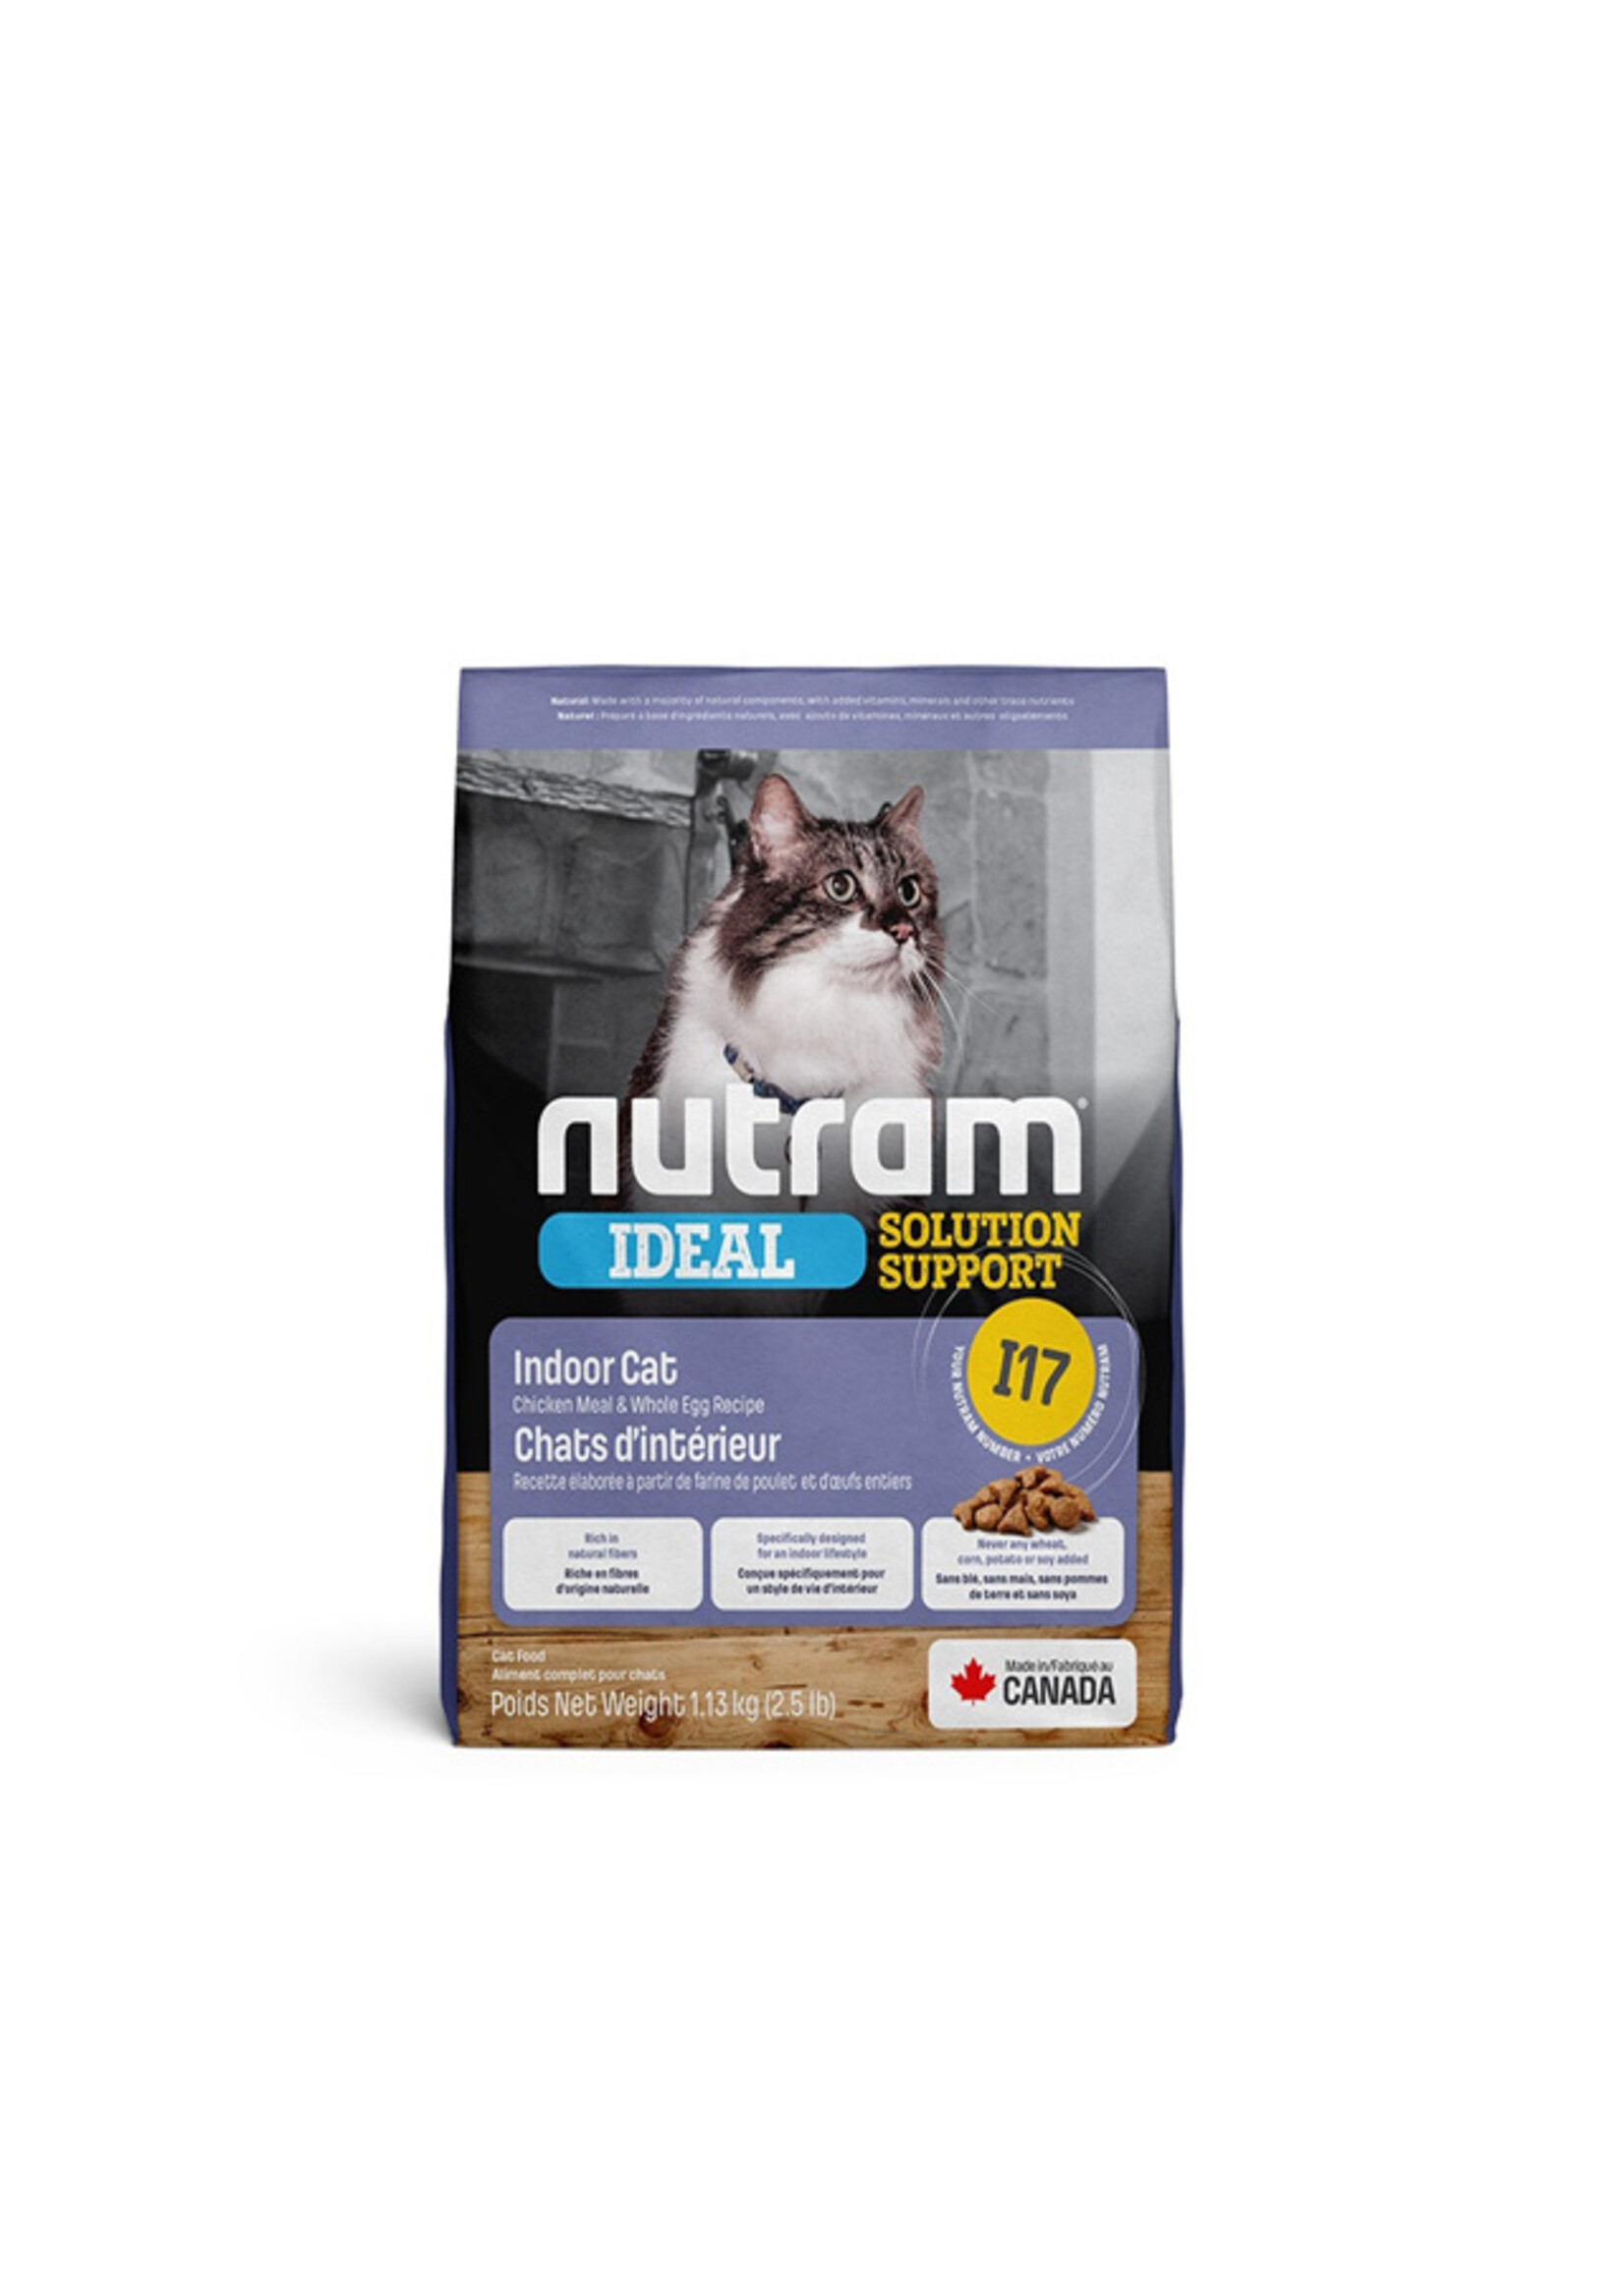 Nutram Nutram 3.0 Ideal Cat I17 Indoor Cat